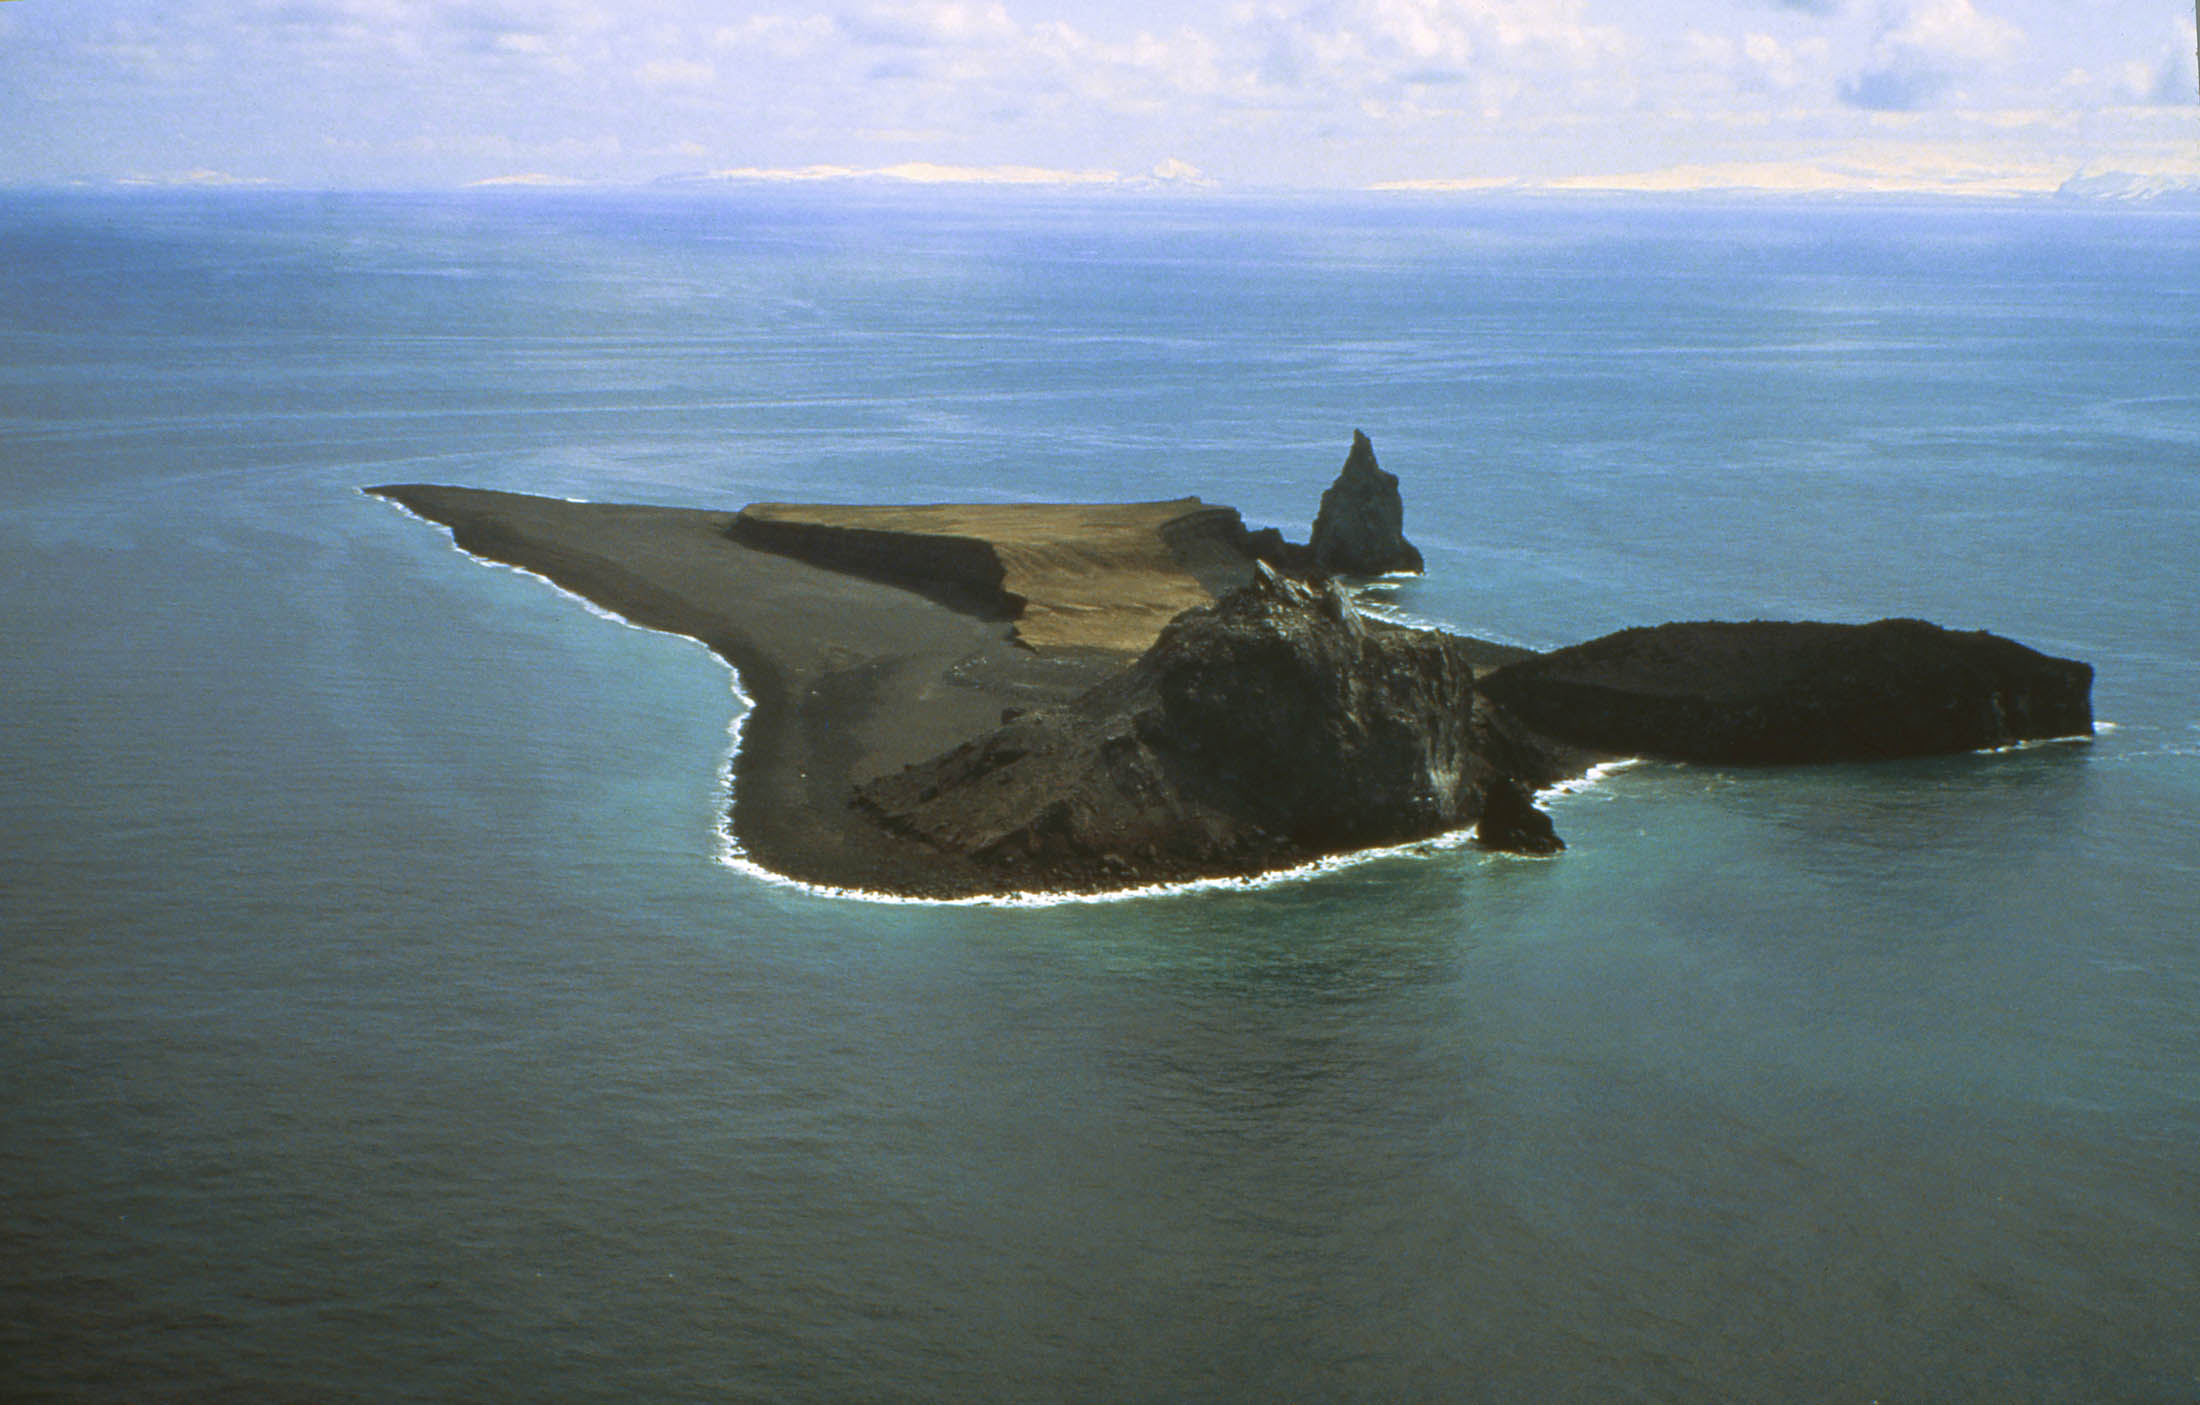 The Bogoslof Island photographed in 1994.
